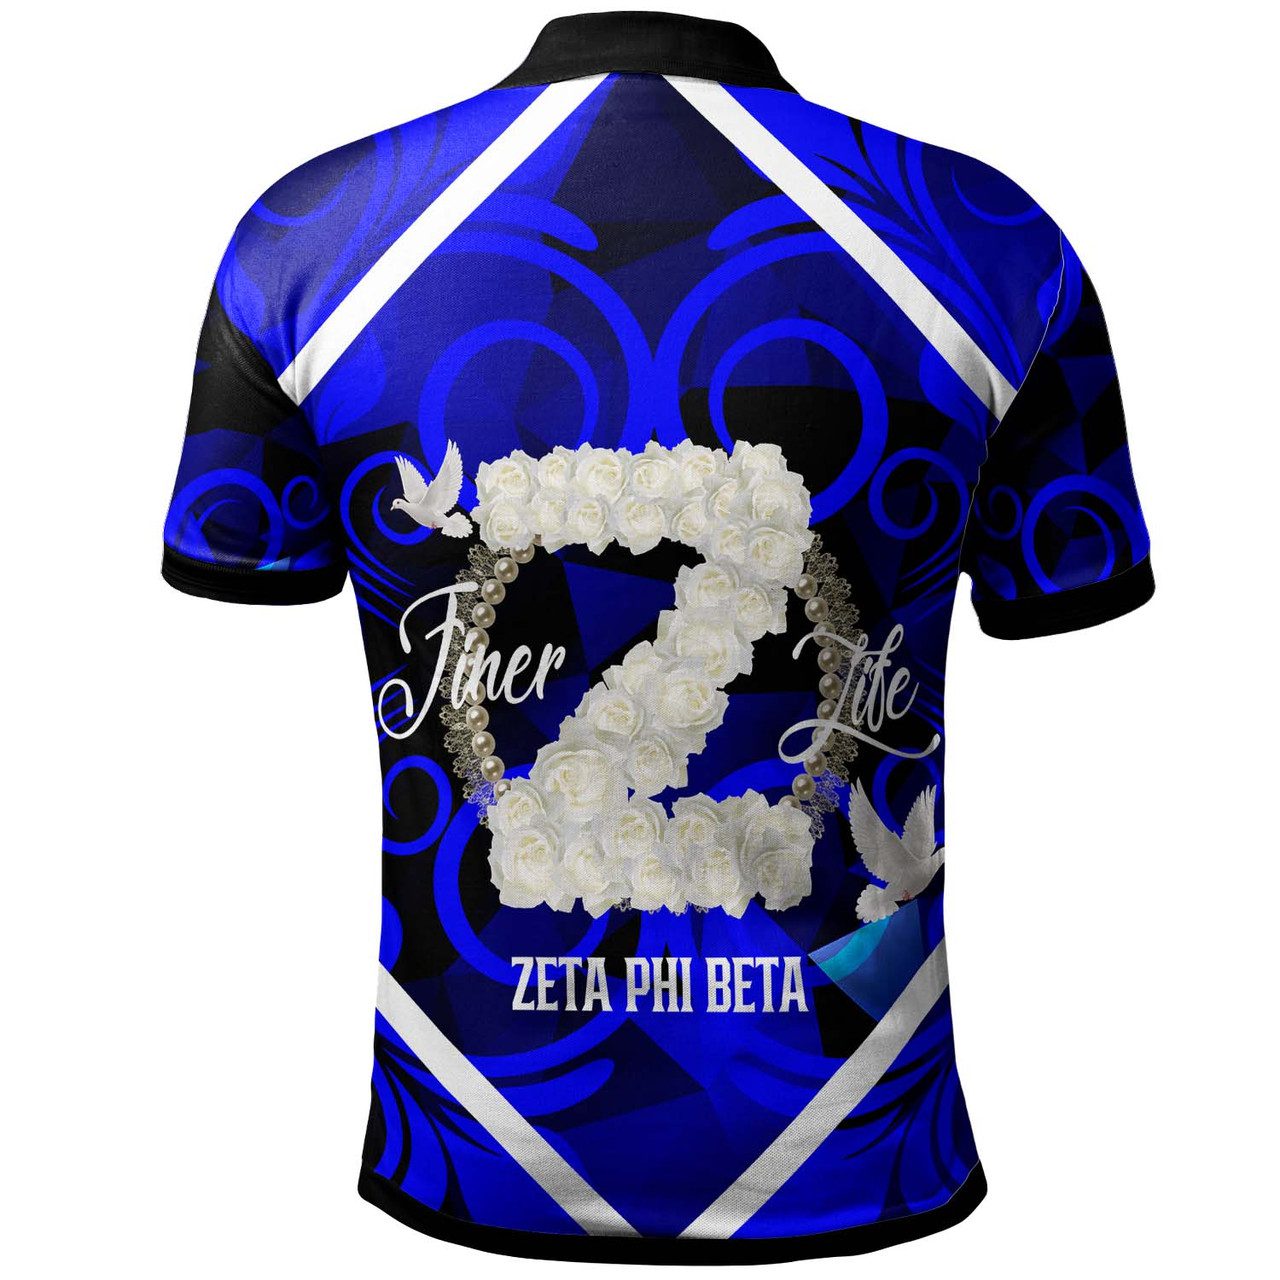 Zeta Phi Beta Polo Shirt – Sorority Zeta Phi Beta White Rose and Dove Pride Polo Shirt